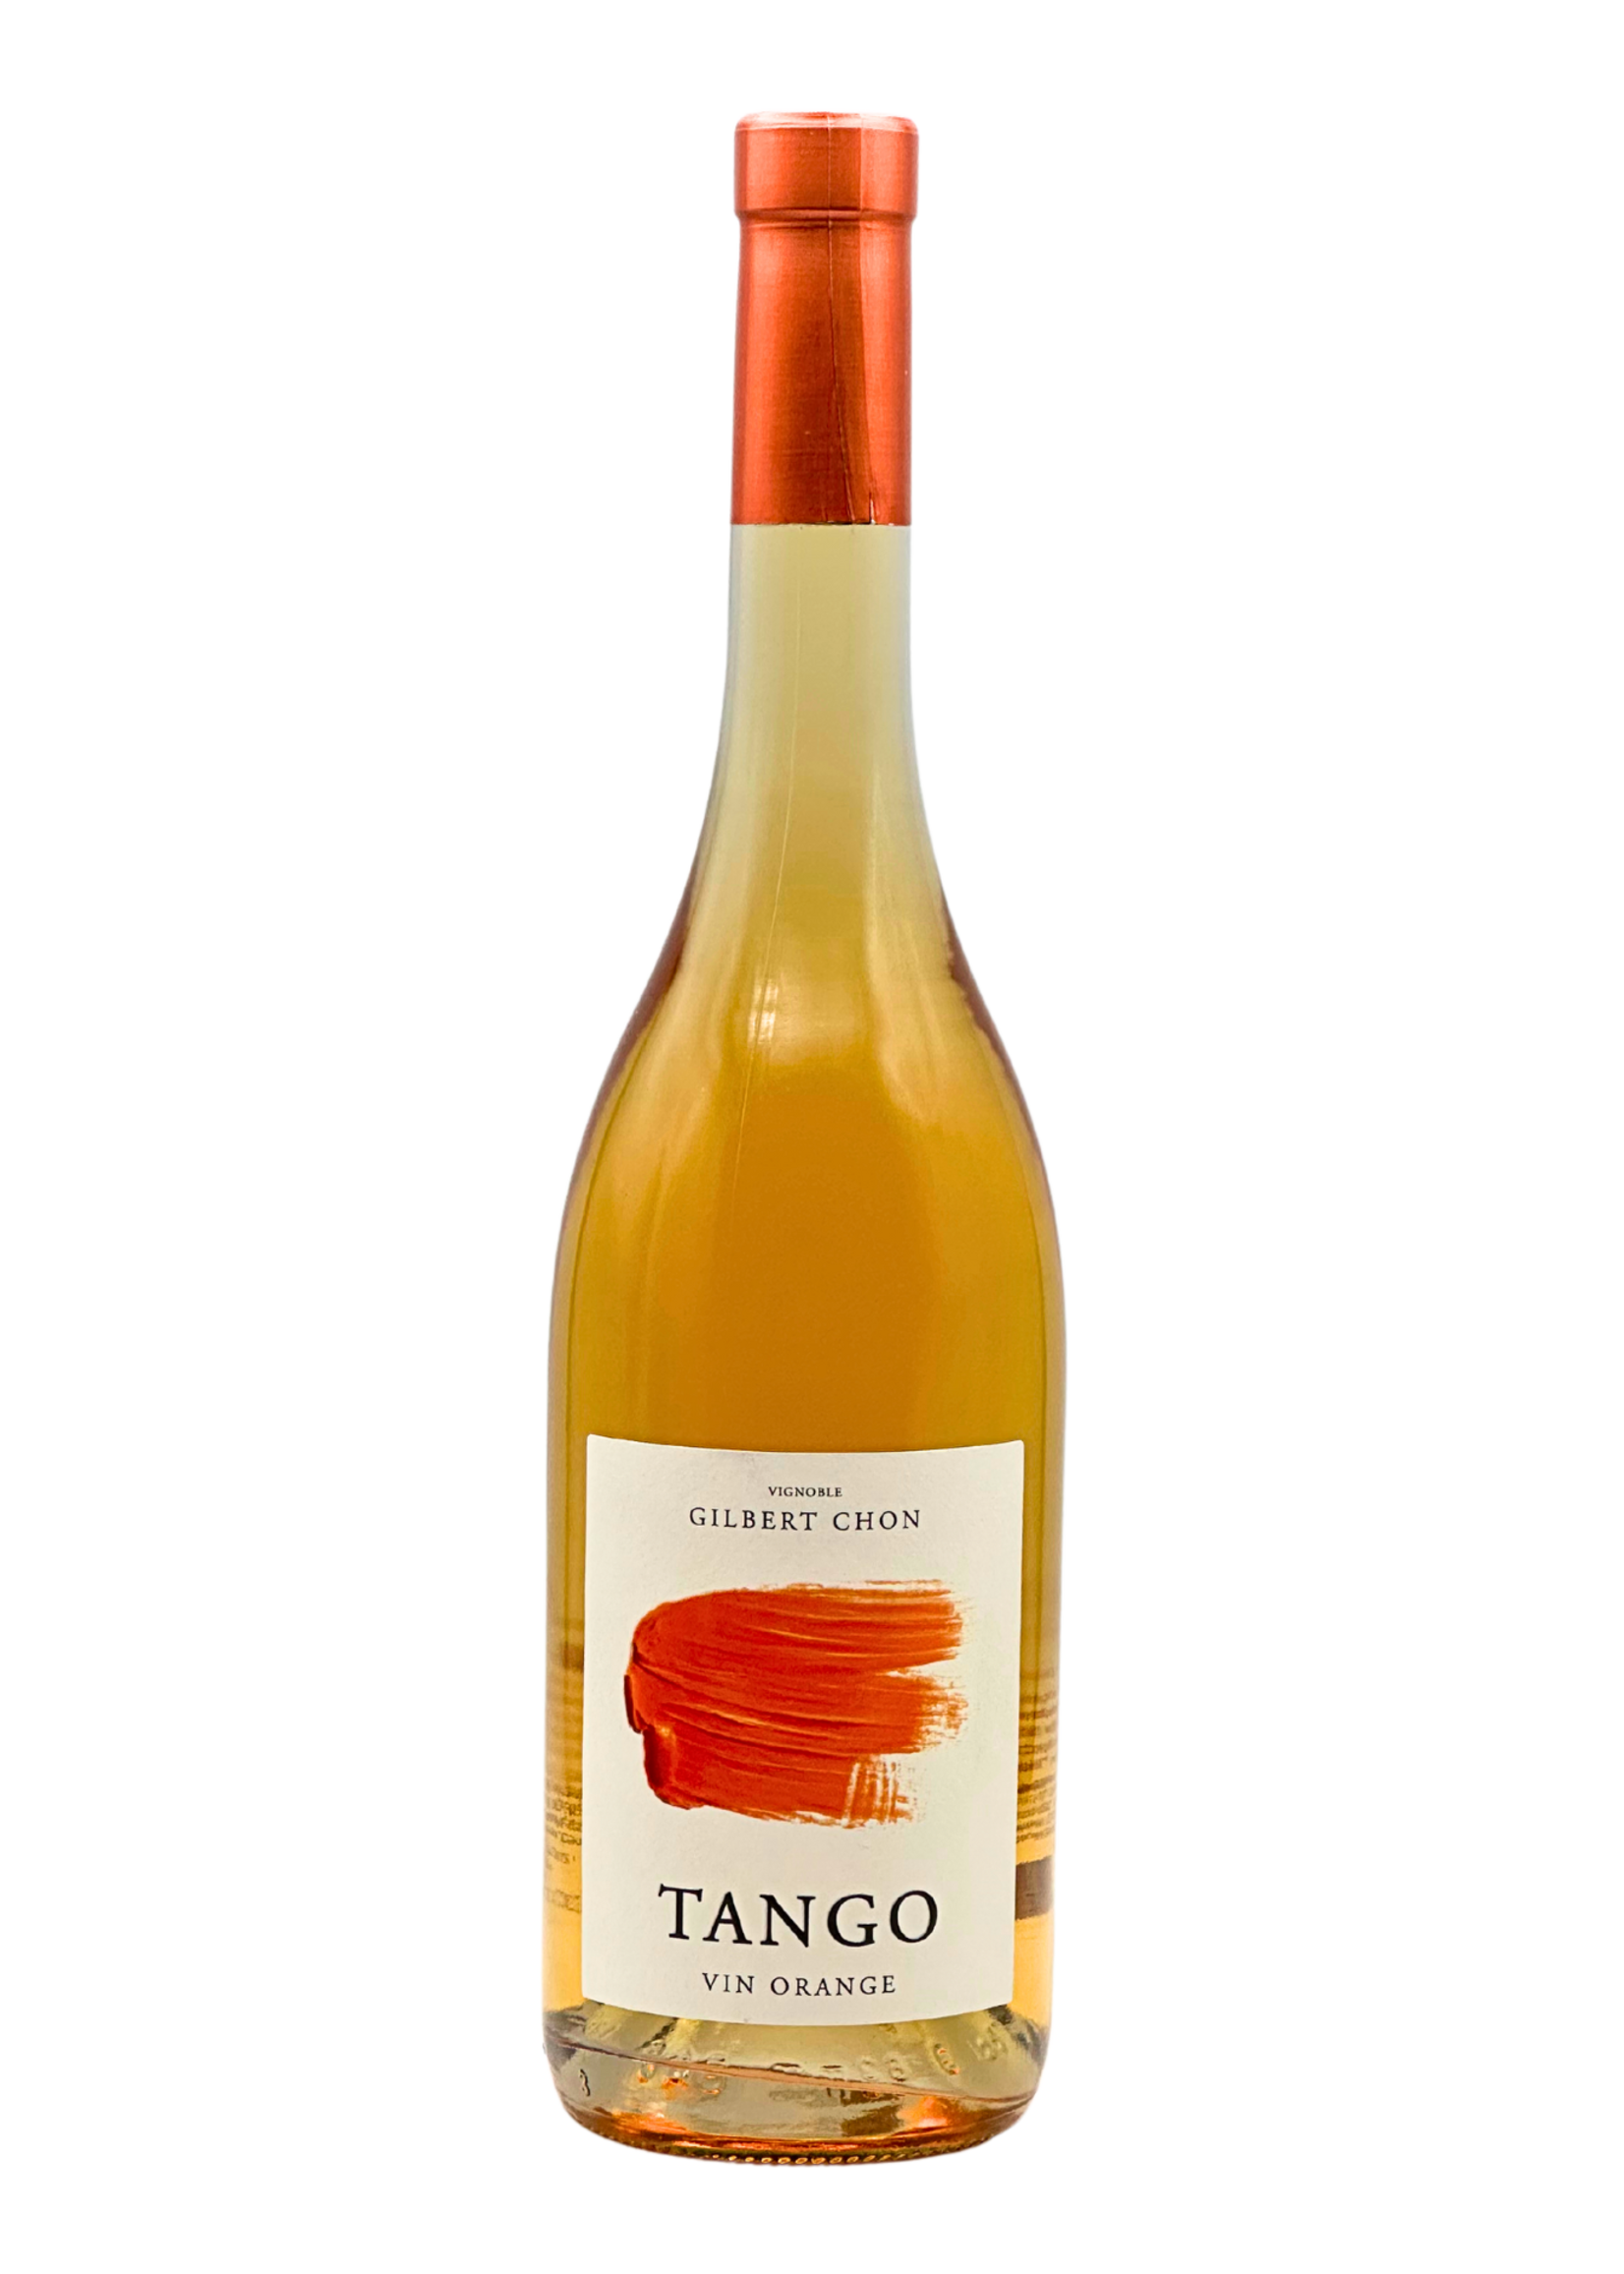 Vin Orange "Tango" 2022 Gilbert Chon